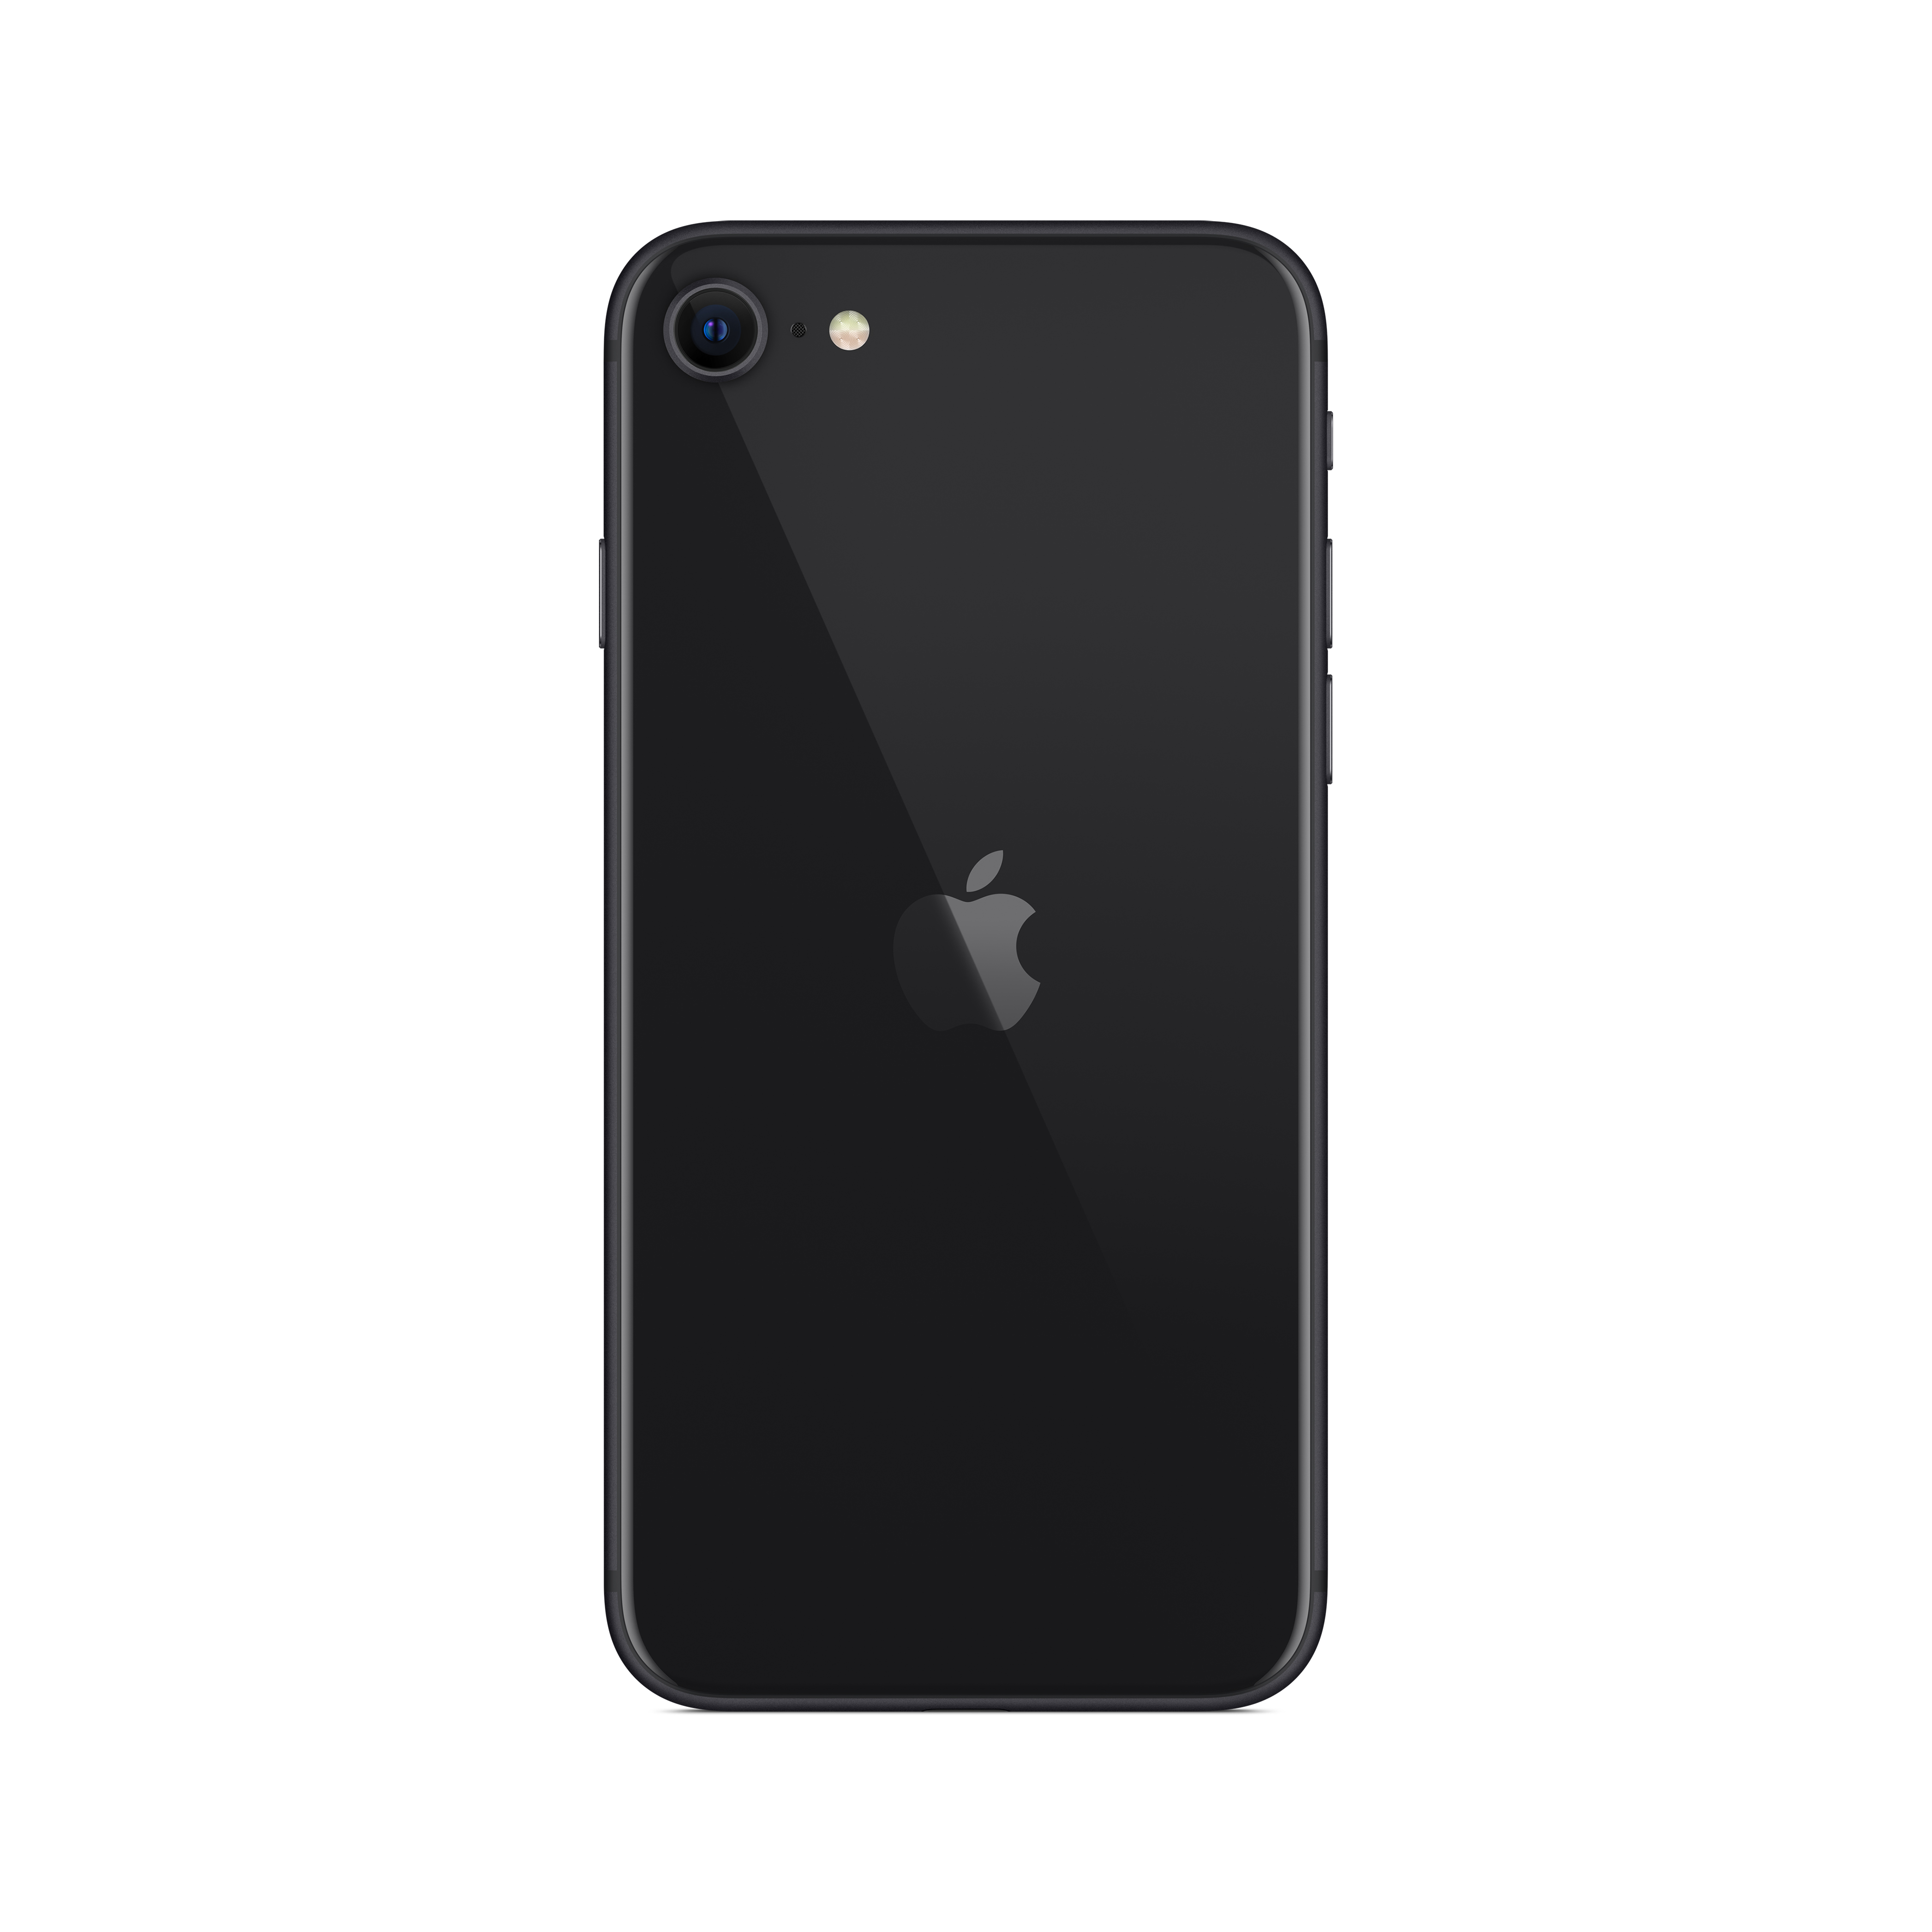 Restored Apple iPhone SE 2 (2nd Gen) 64GB Verizon GSM Unlocked T-Mobile AT&T Black (2020) (Refurbished) - image 6 of 8